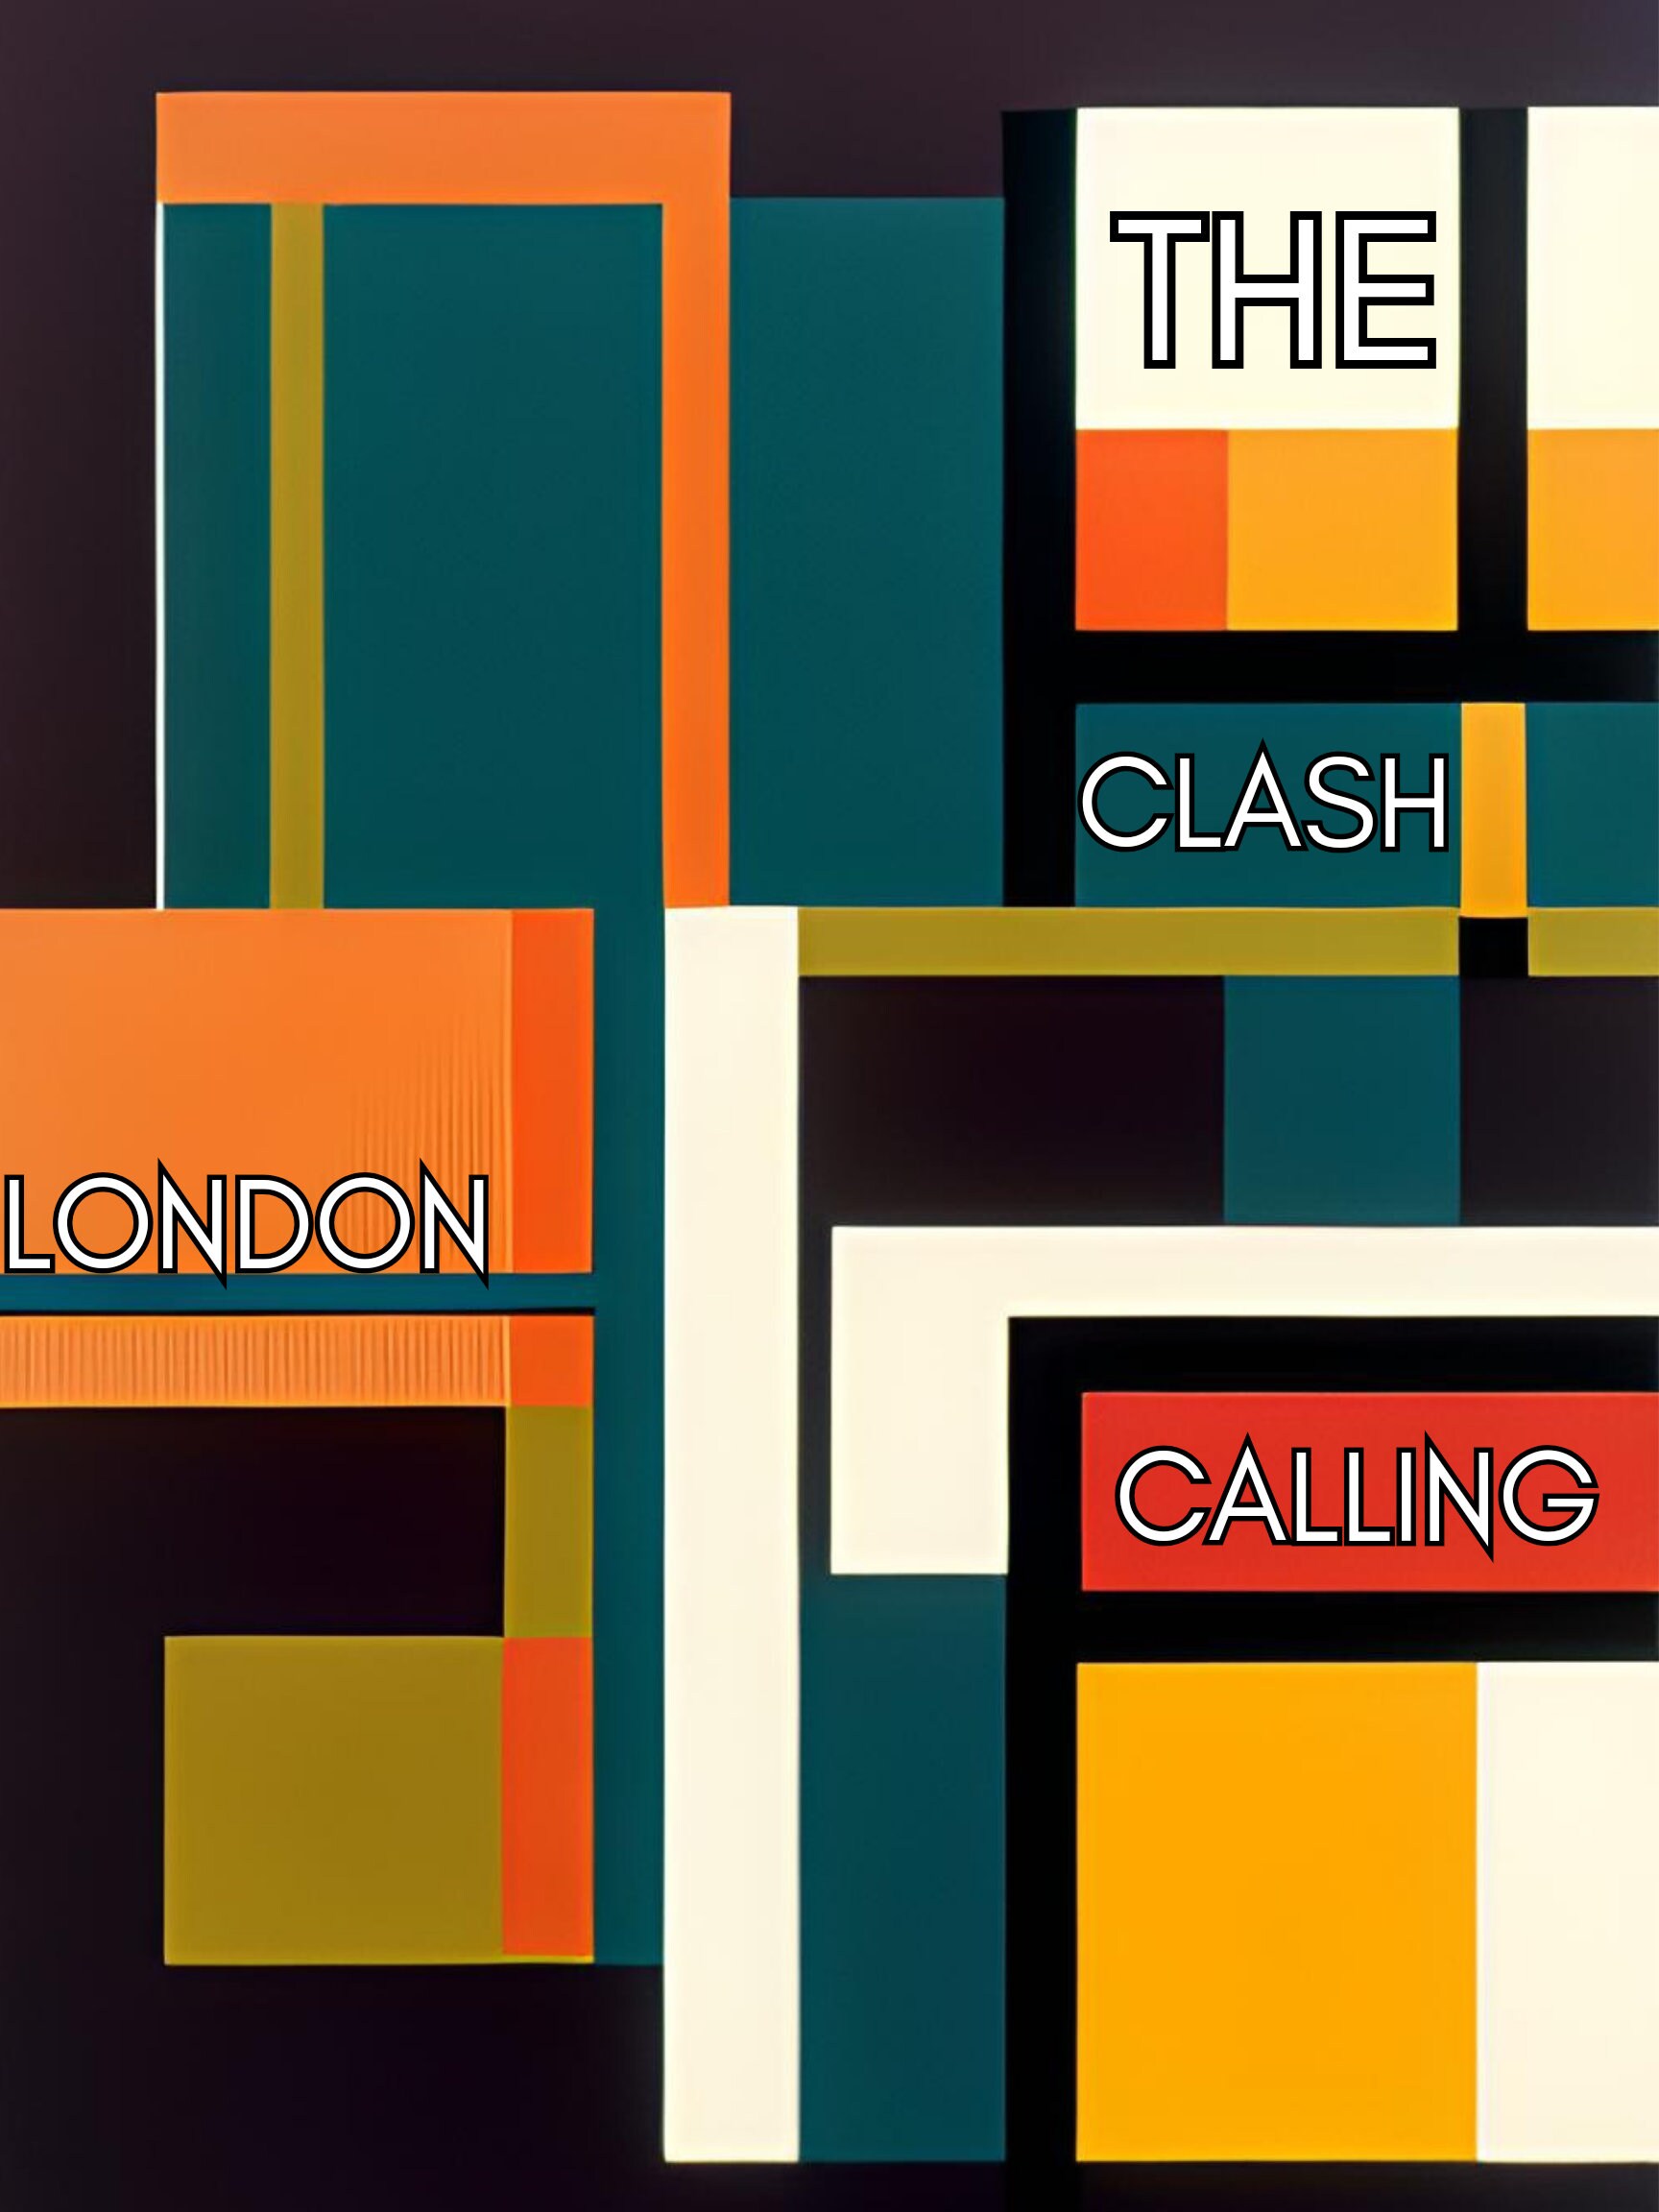 Discover The Clash London Calling album art print